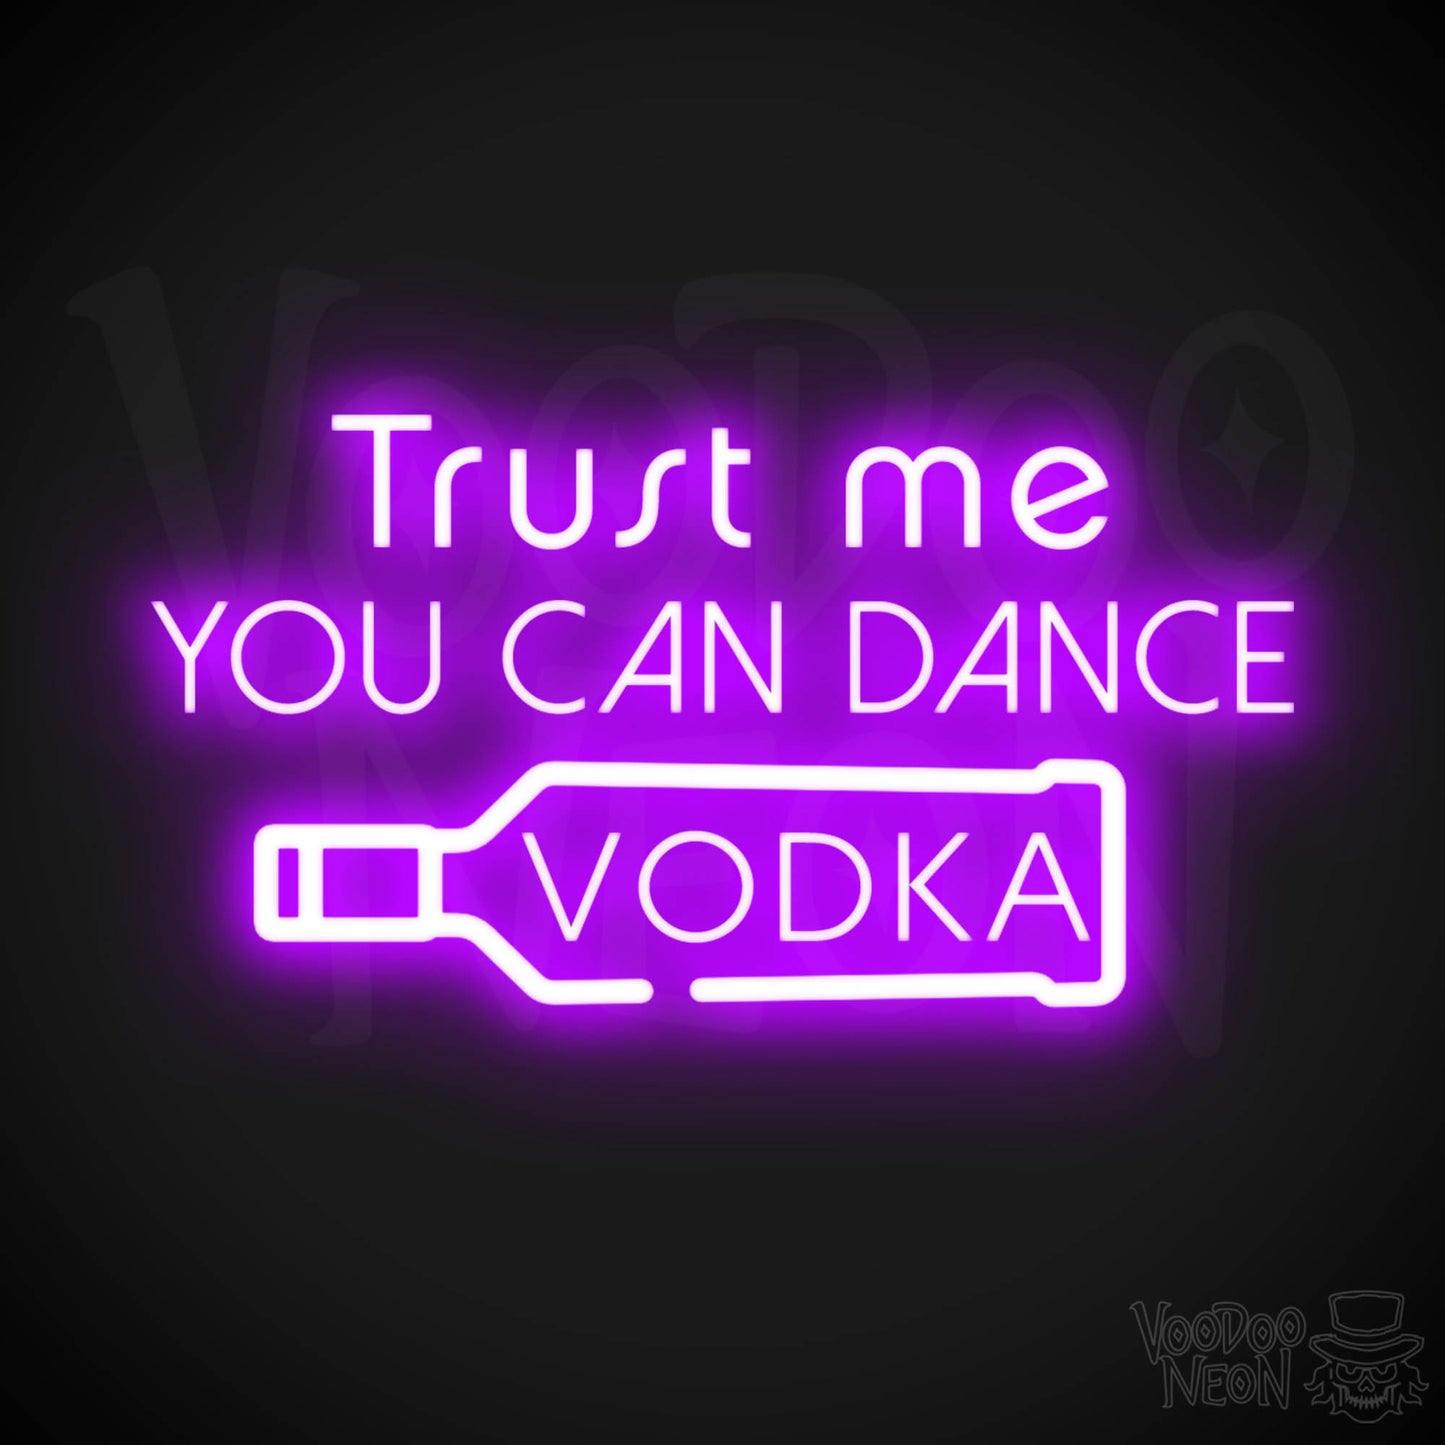 Trust Me You Can Dance Vodka Neon Sign - Vodka Bar Sign - LED Signs - Color Purple